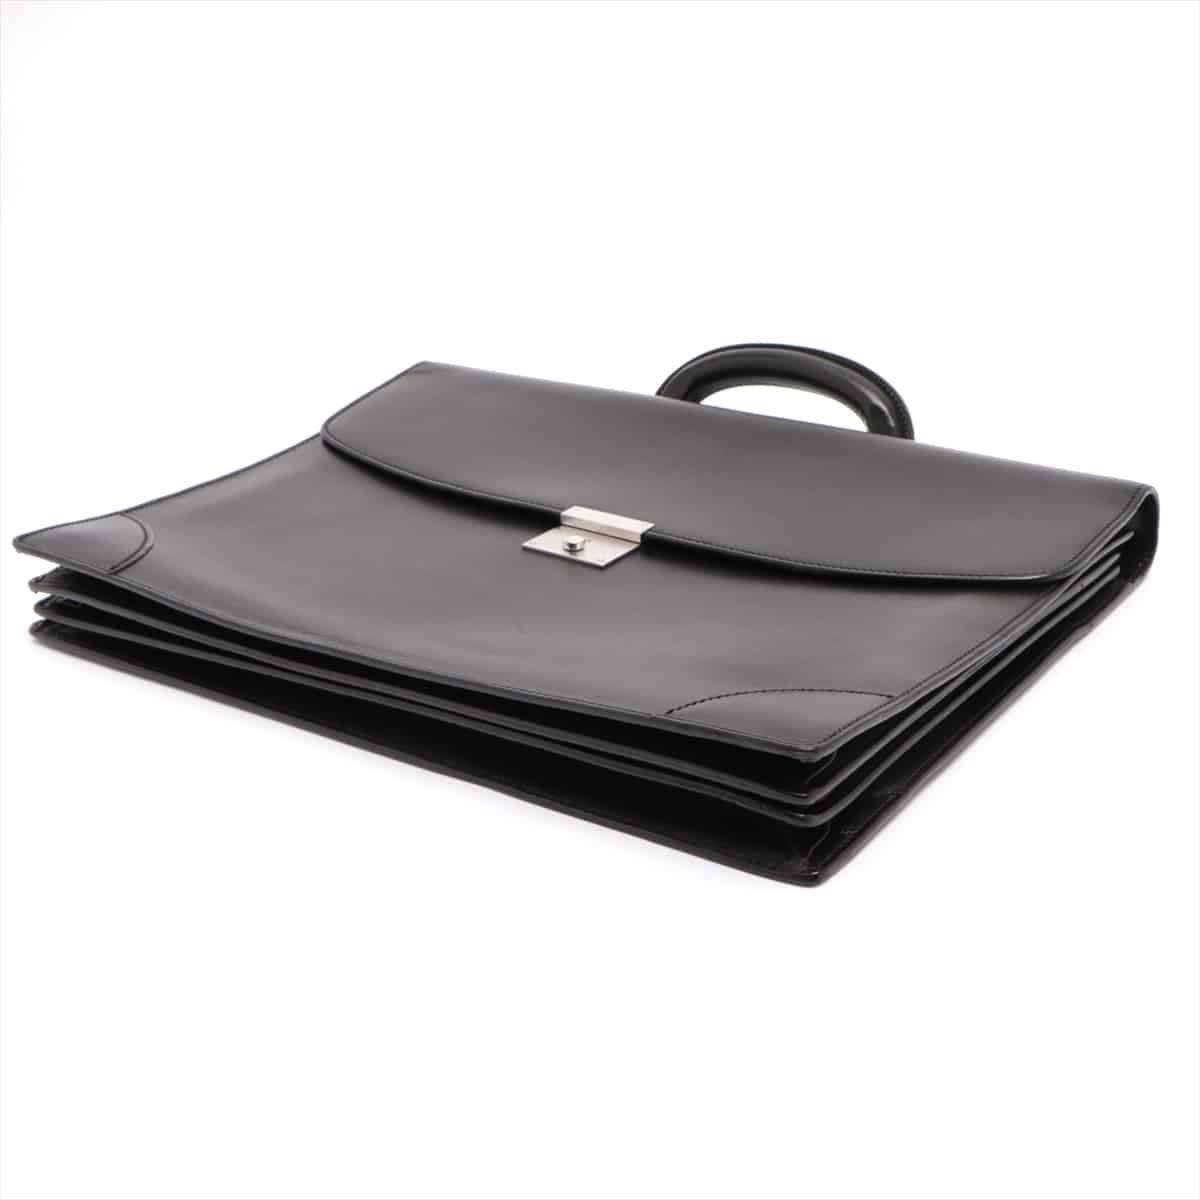 Valextra Leather Business bag Black